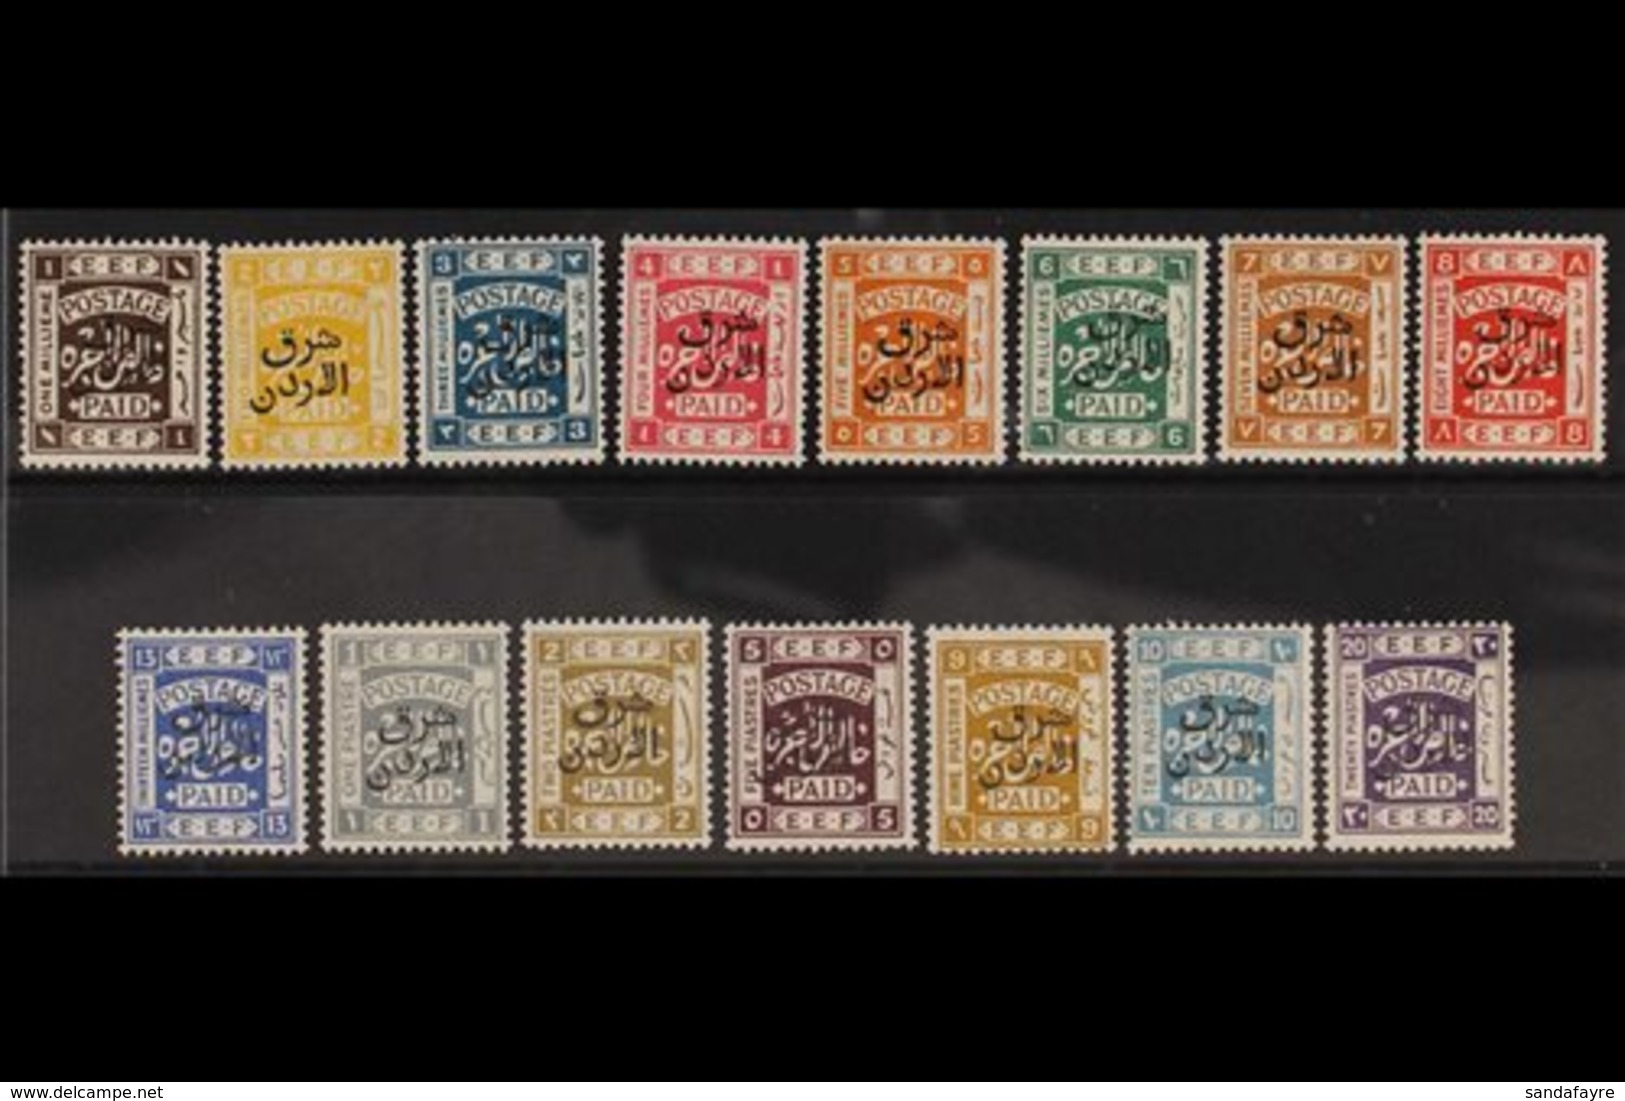 1925-26 "East Of The Jordan" Overprints On Palestine Complete Set, SG 143/57, Very Fine Mint, Very Fresh. (15 Stamps) Fo - Jordan